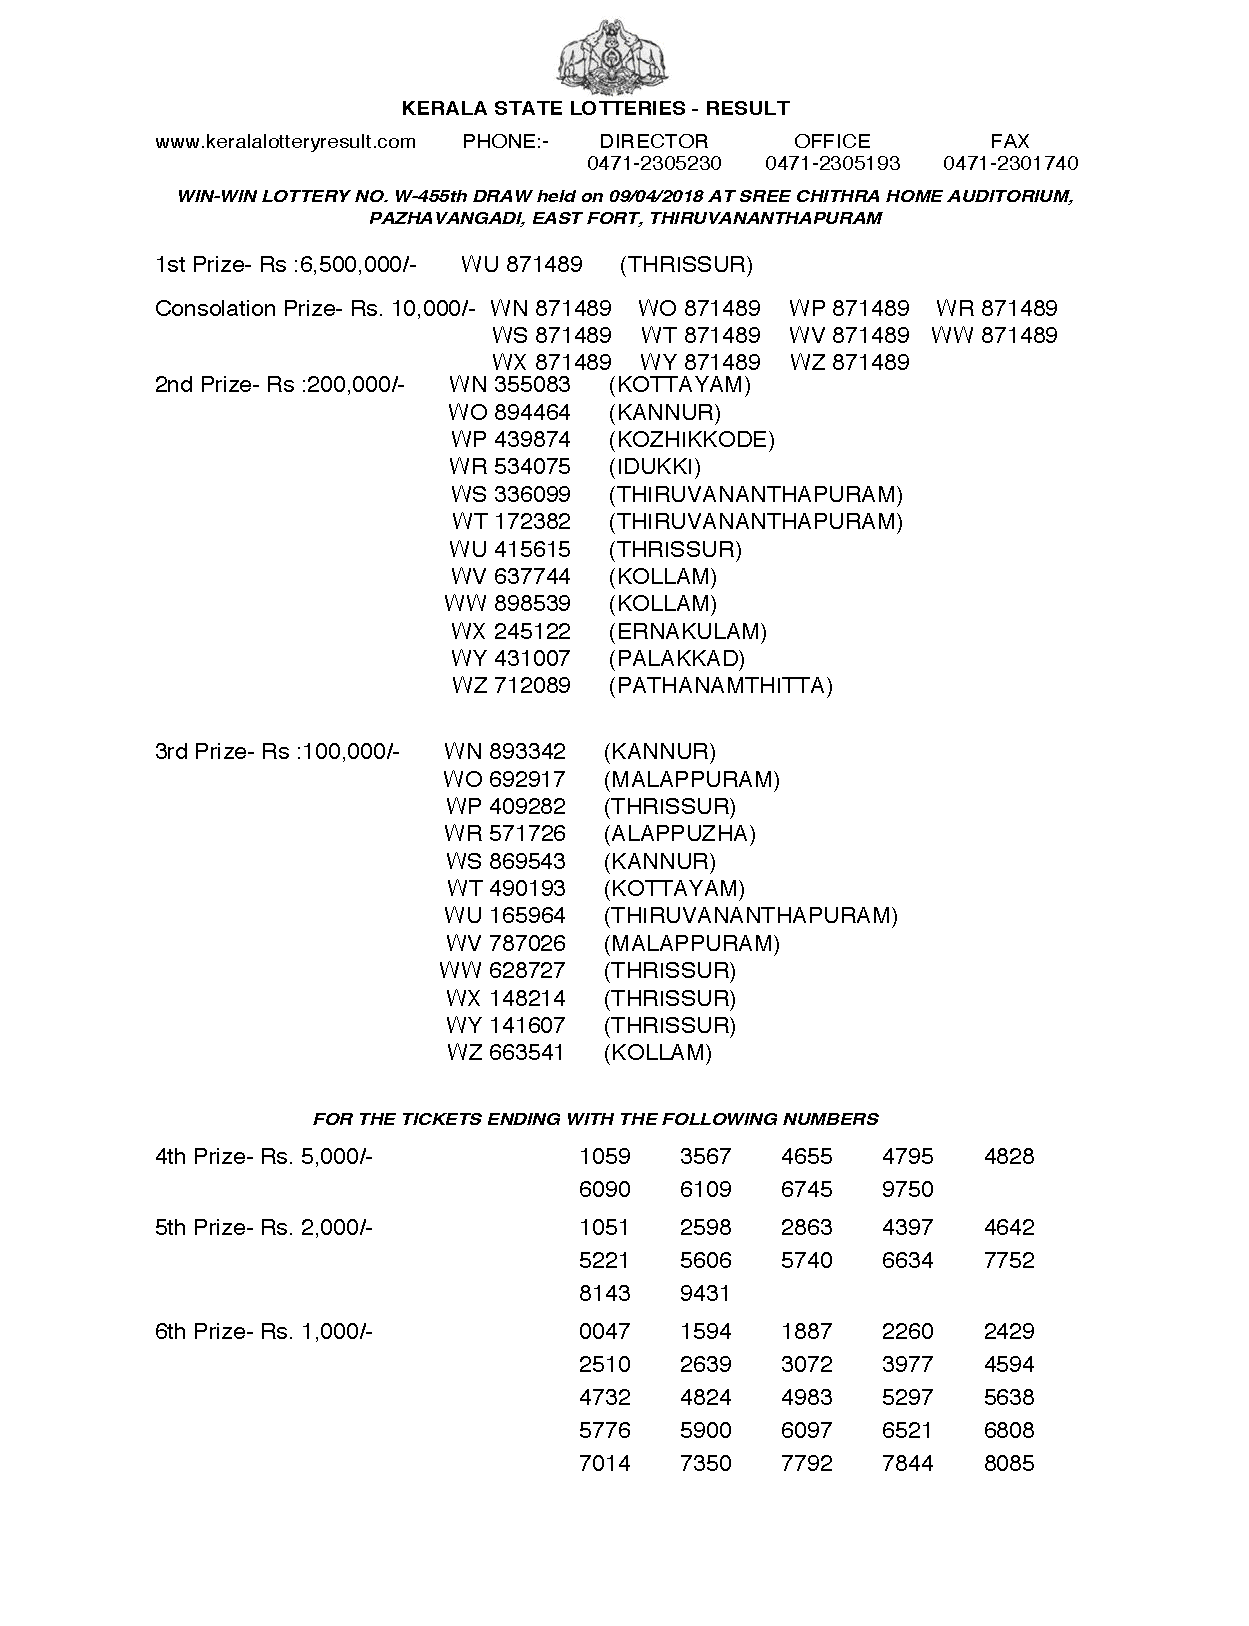 Winwin W455 Kerala Lottery Results Screenshot: Page 1